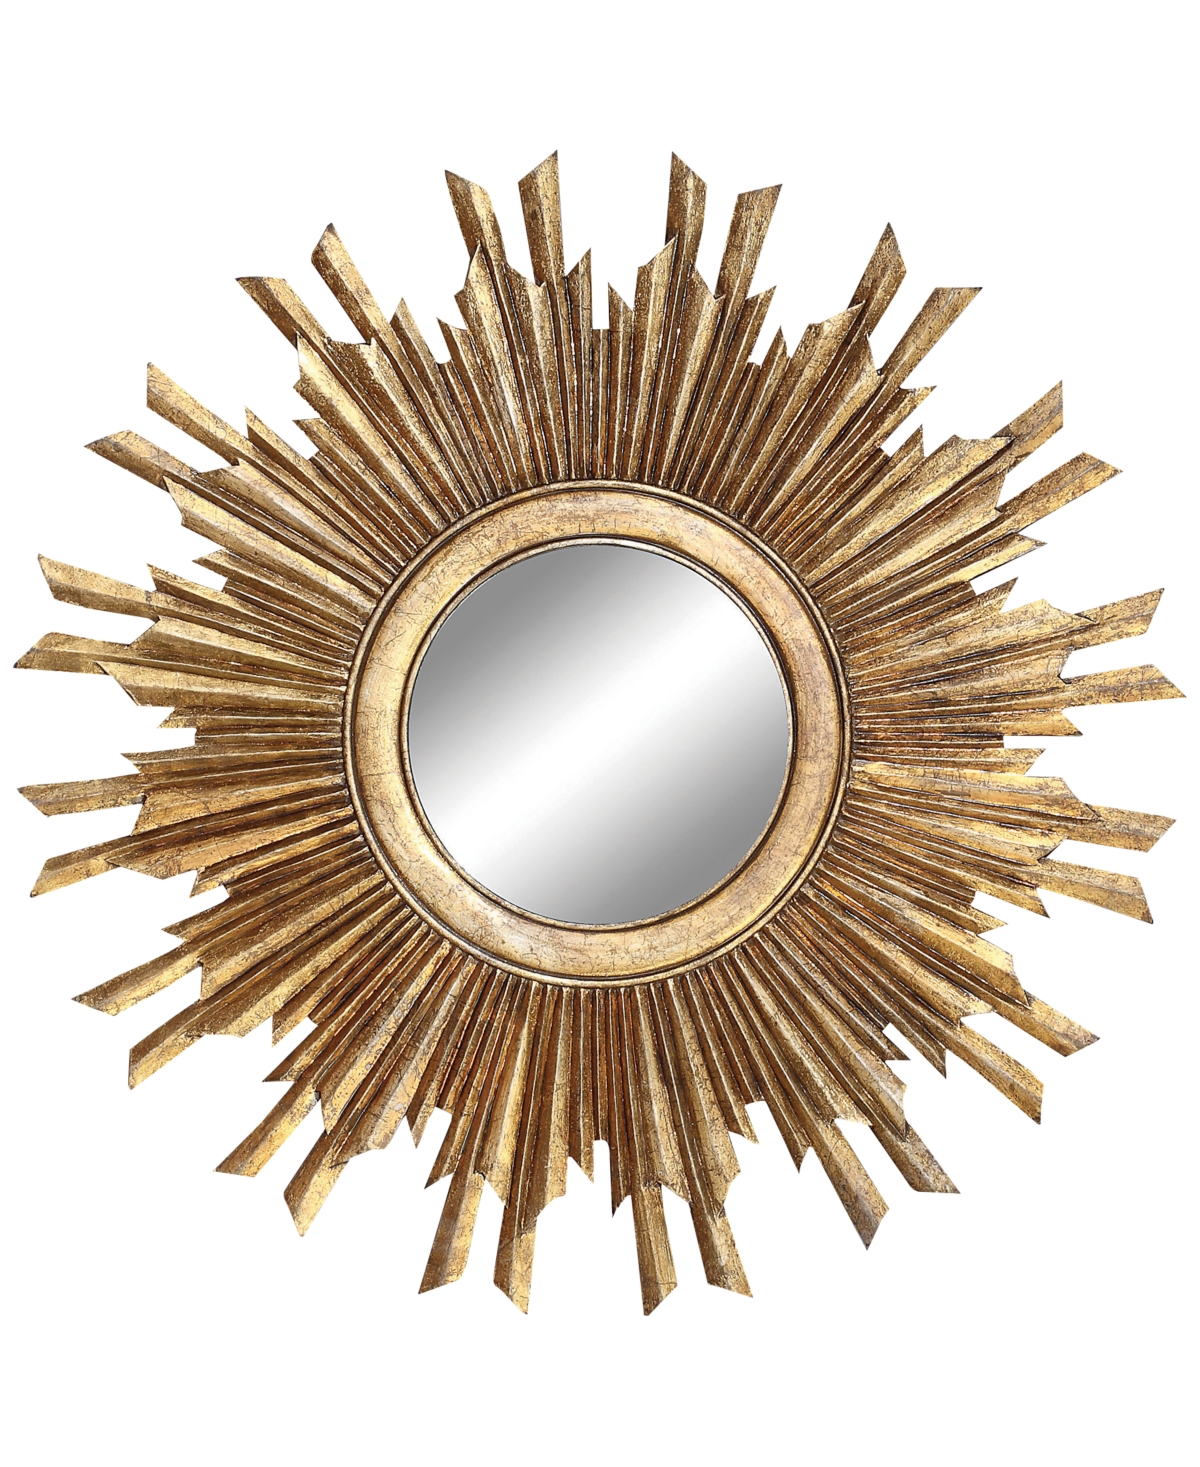 Round Wood Sunburst Wall Mirror, Gold-Tone - Gold